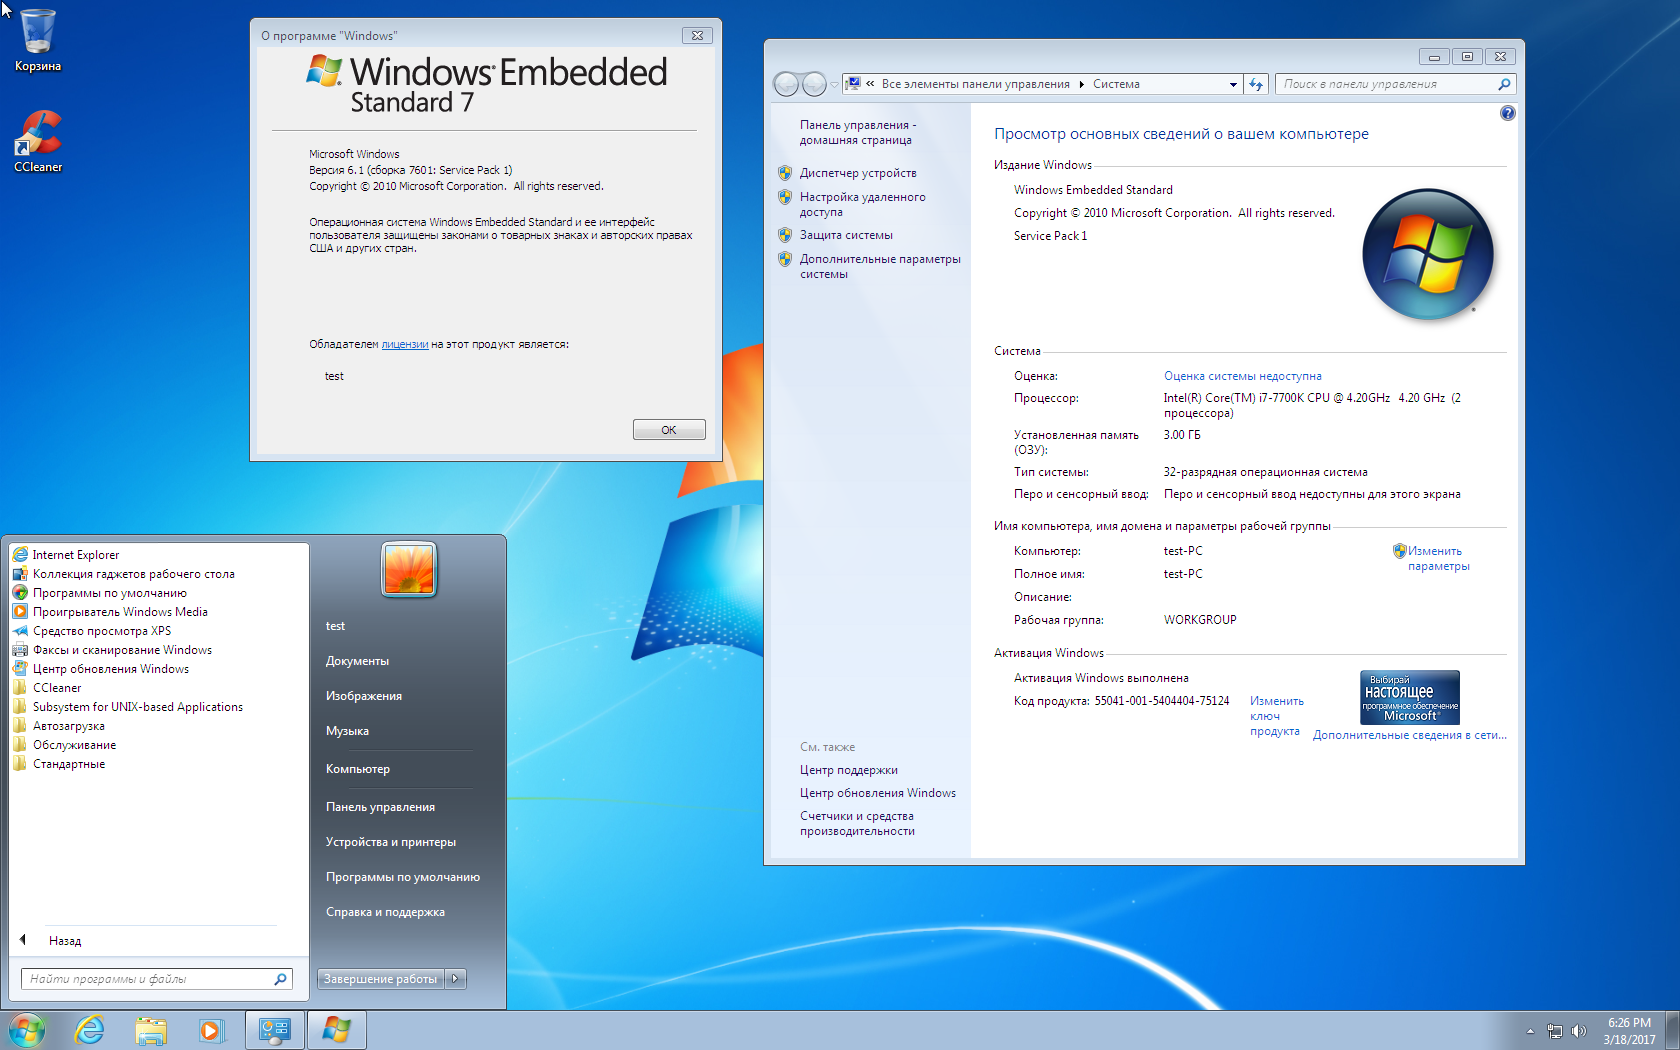 Imagex windows 7 embedded torrent proaudiotorrents vs audionews